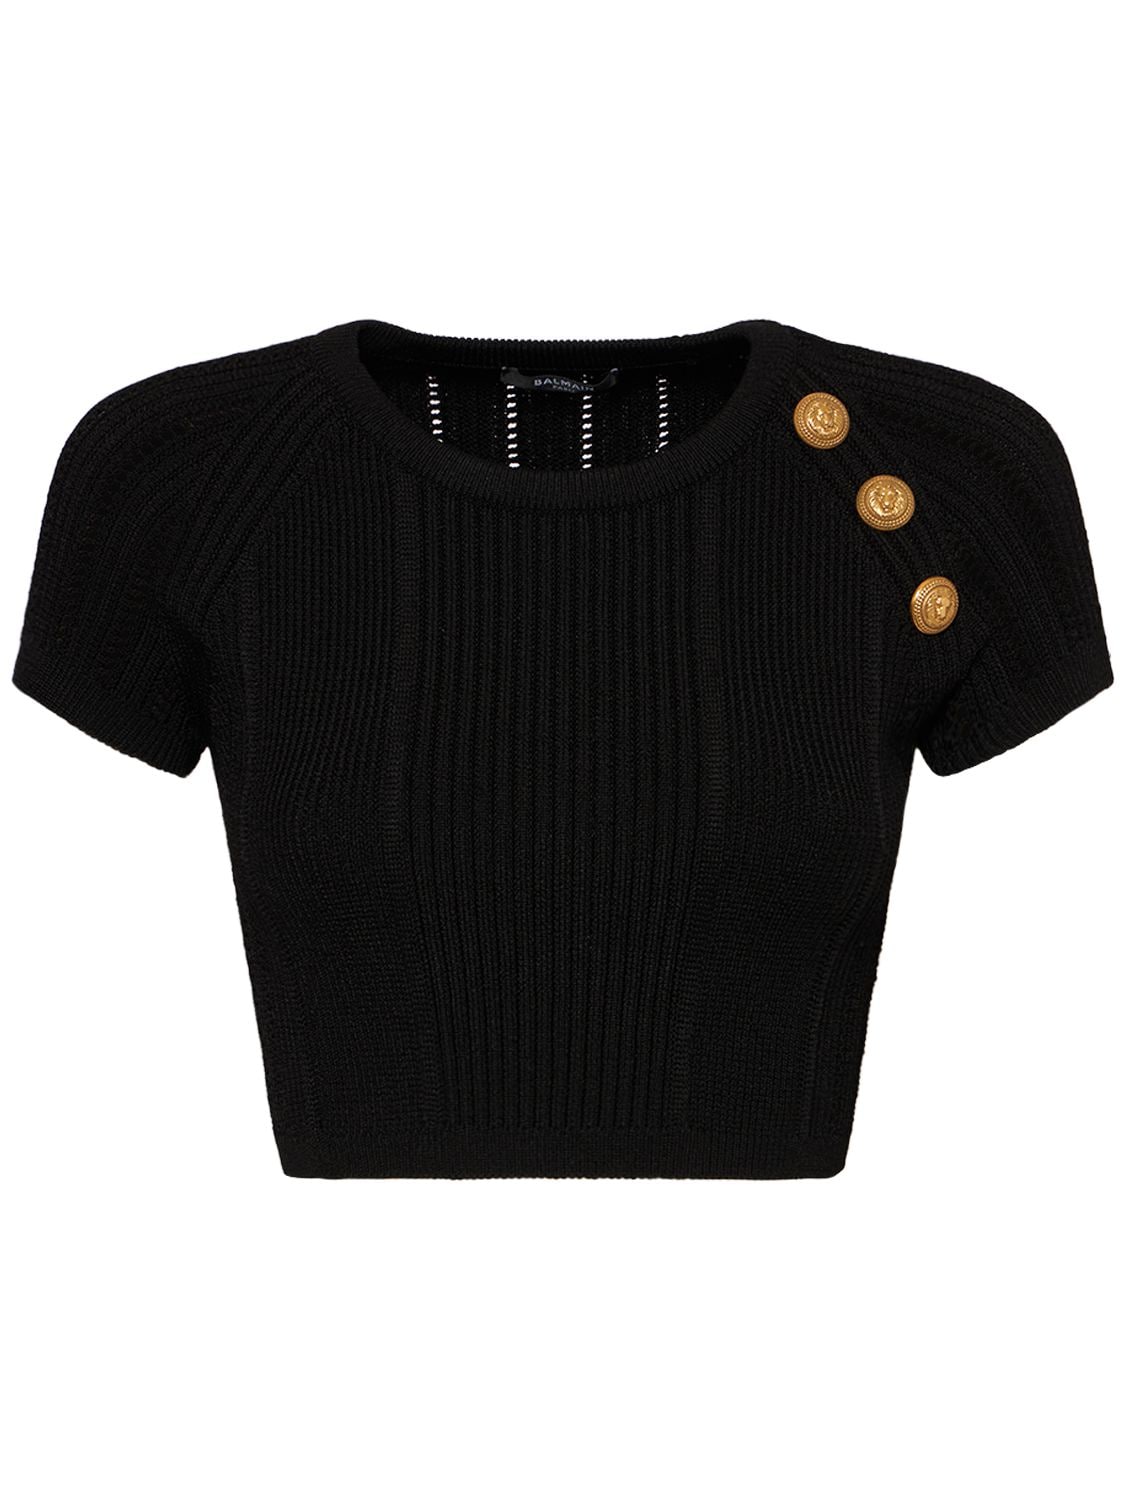 Balmain Embellished Knit Crop Top In Black